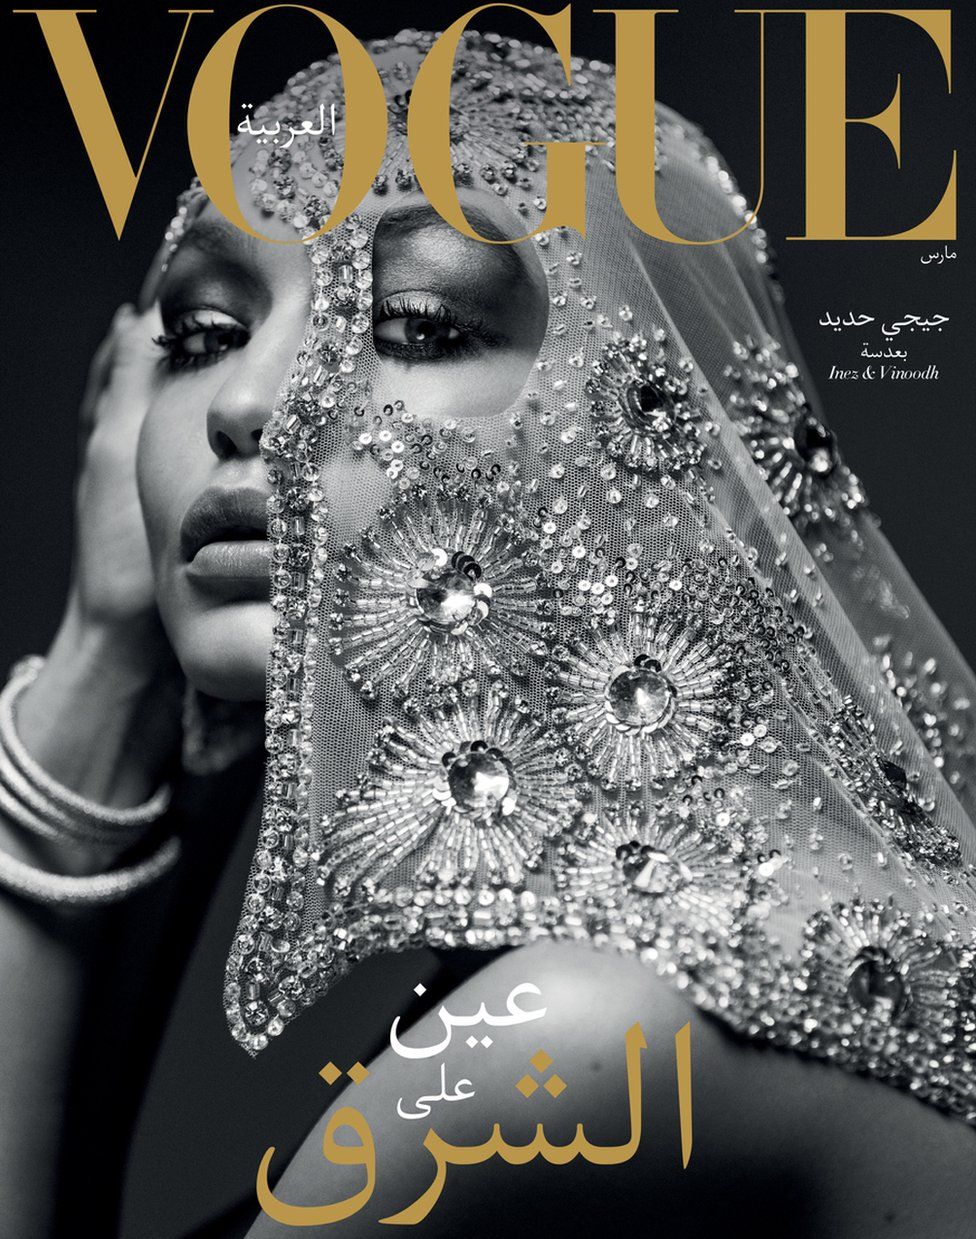 GiGi Hadid on the cover of Vogue Arabia